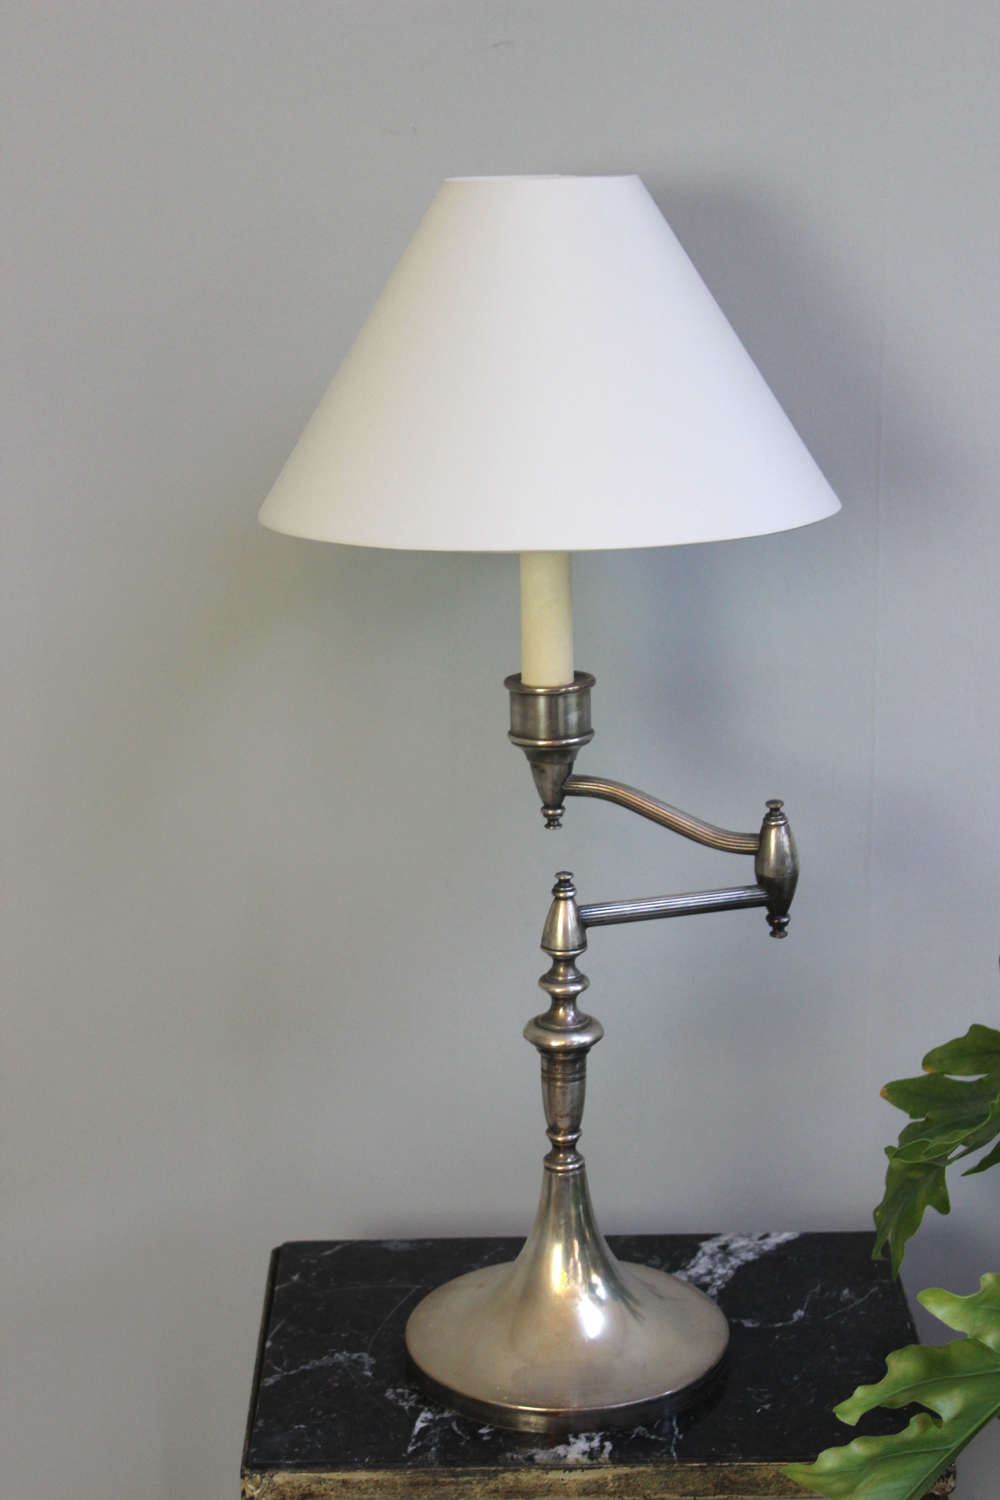 Valenti style swivel arm desk light